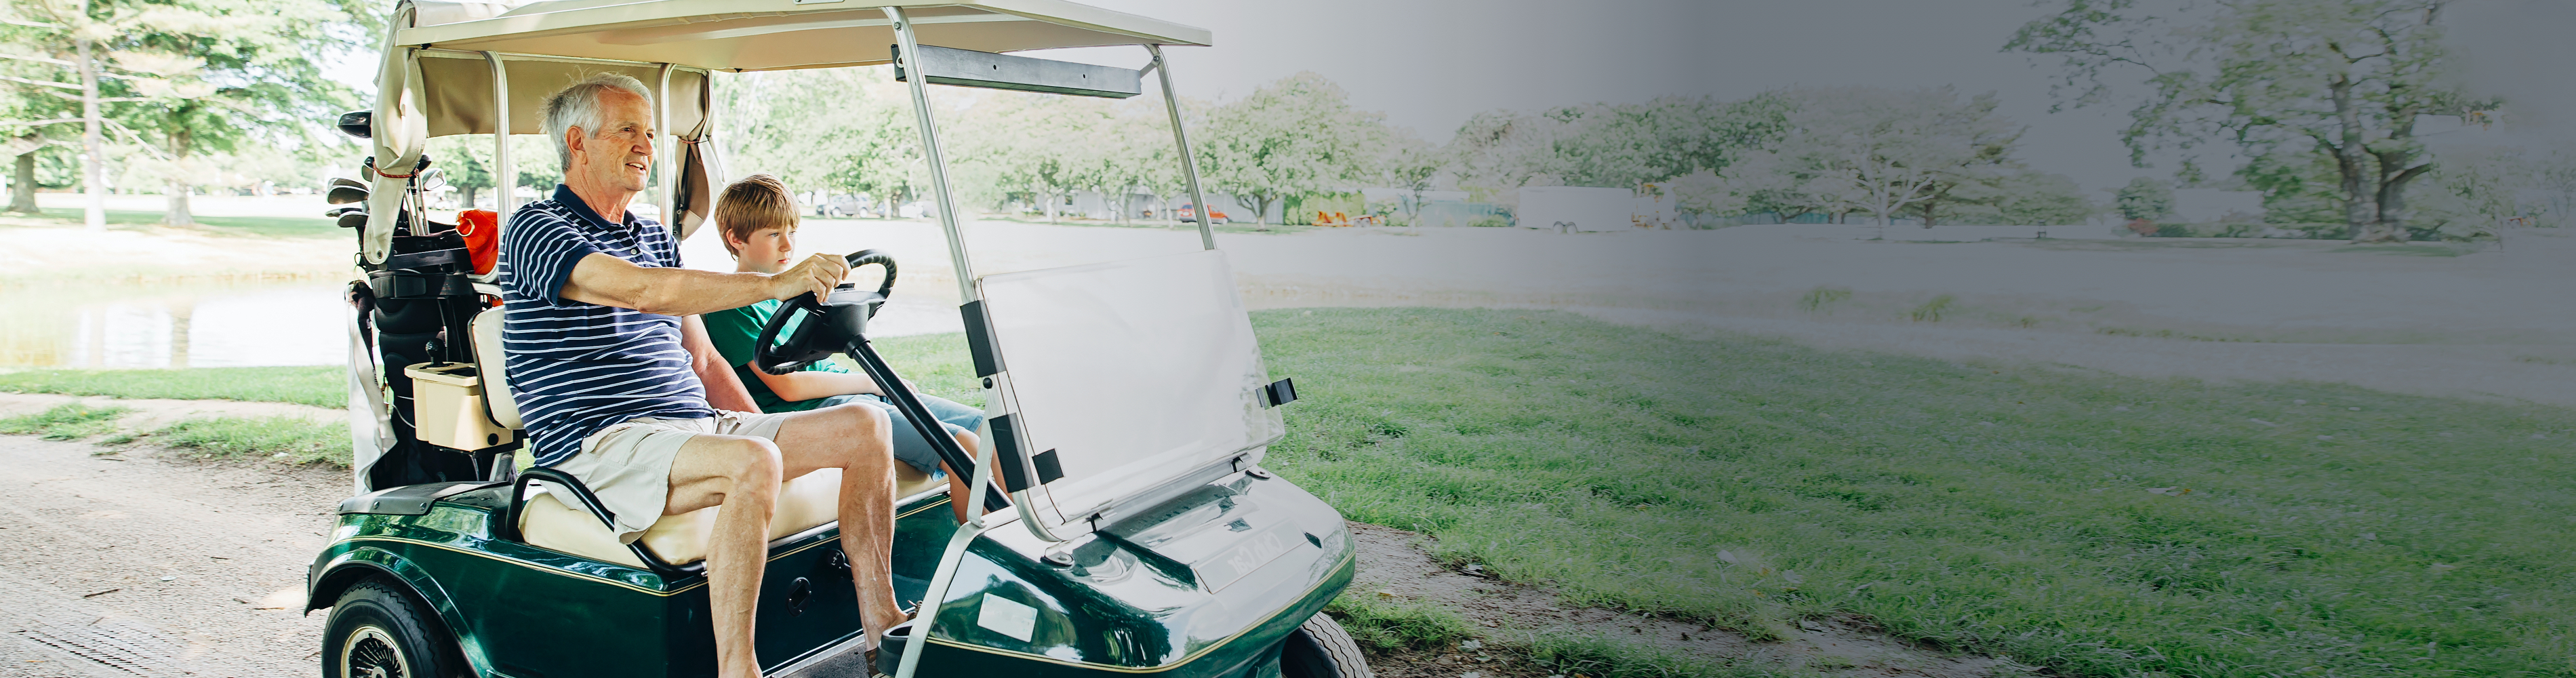 Senior man driving golf cart with his grandson